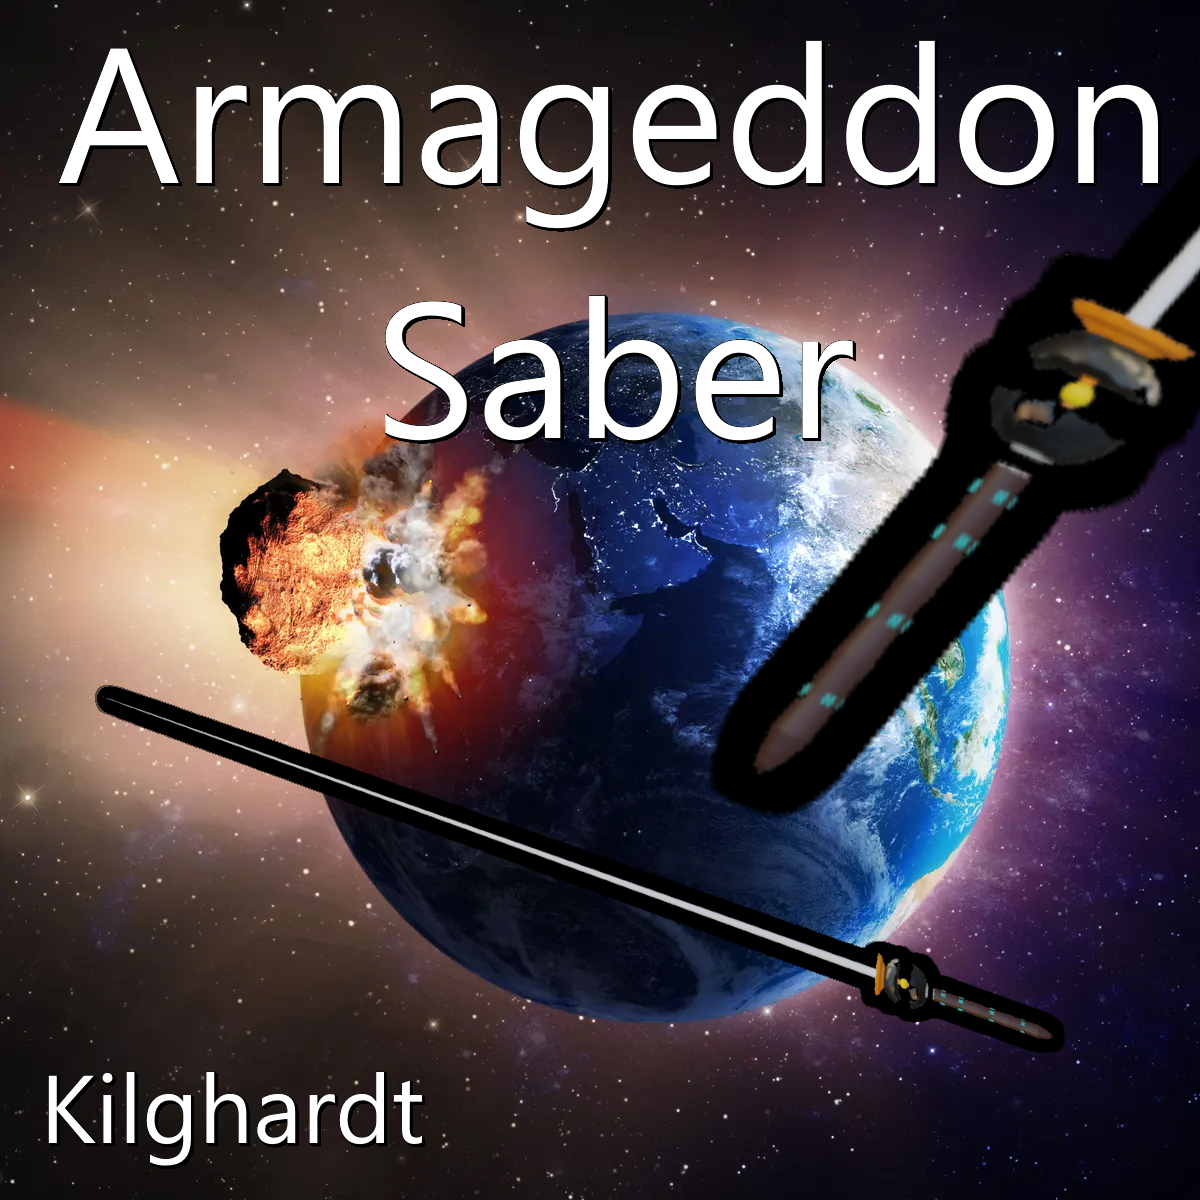 Armageddon Saber